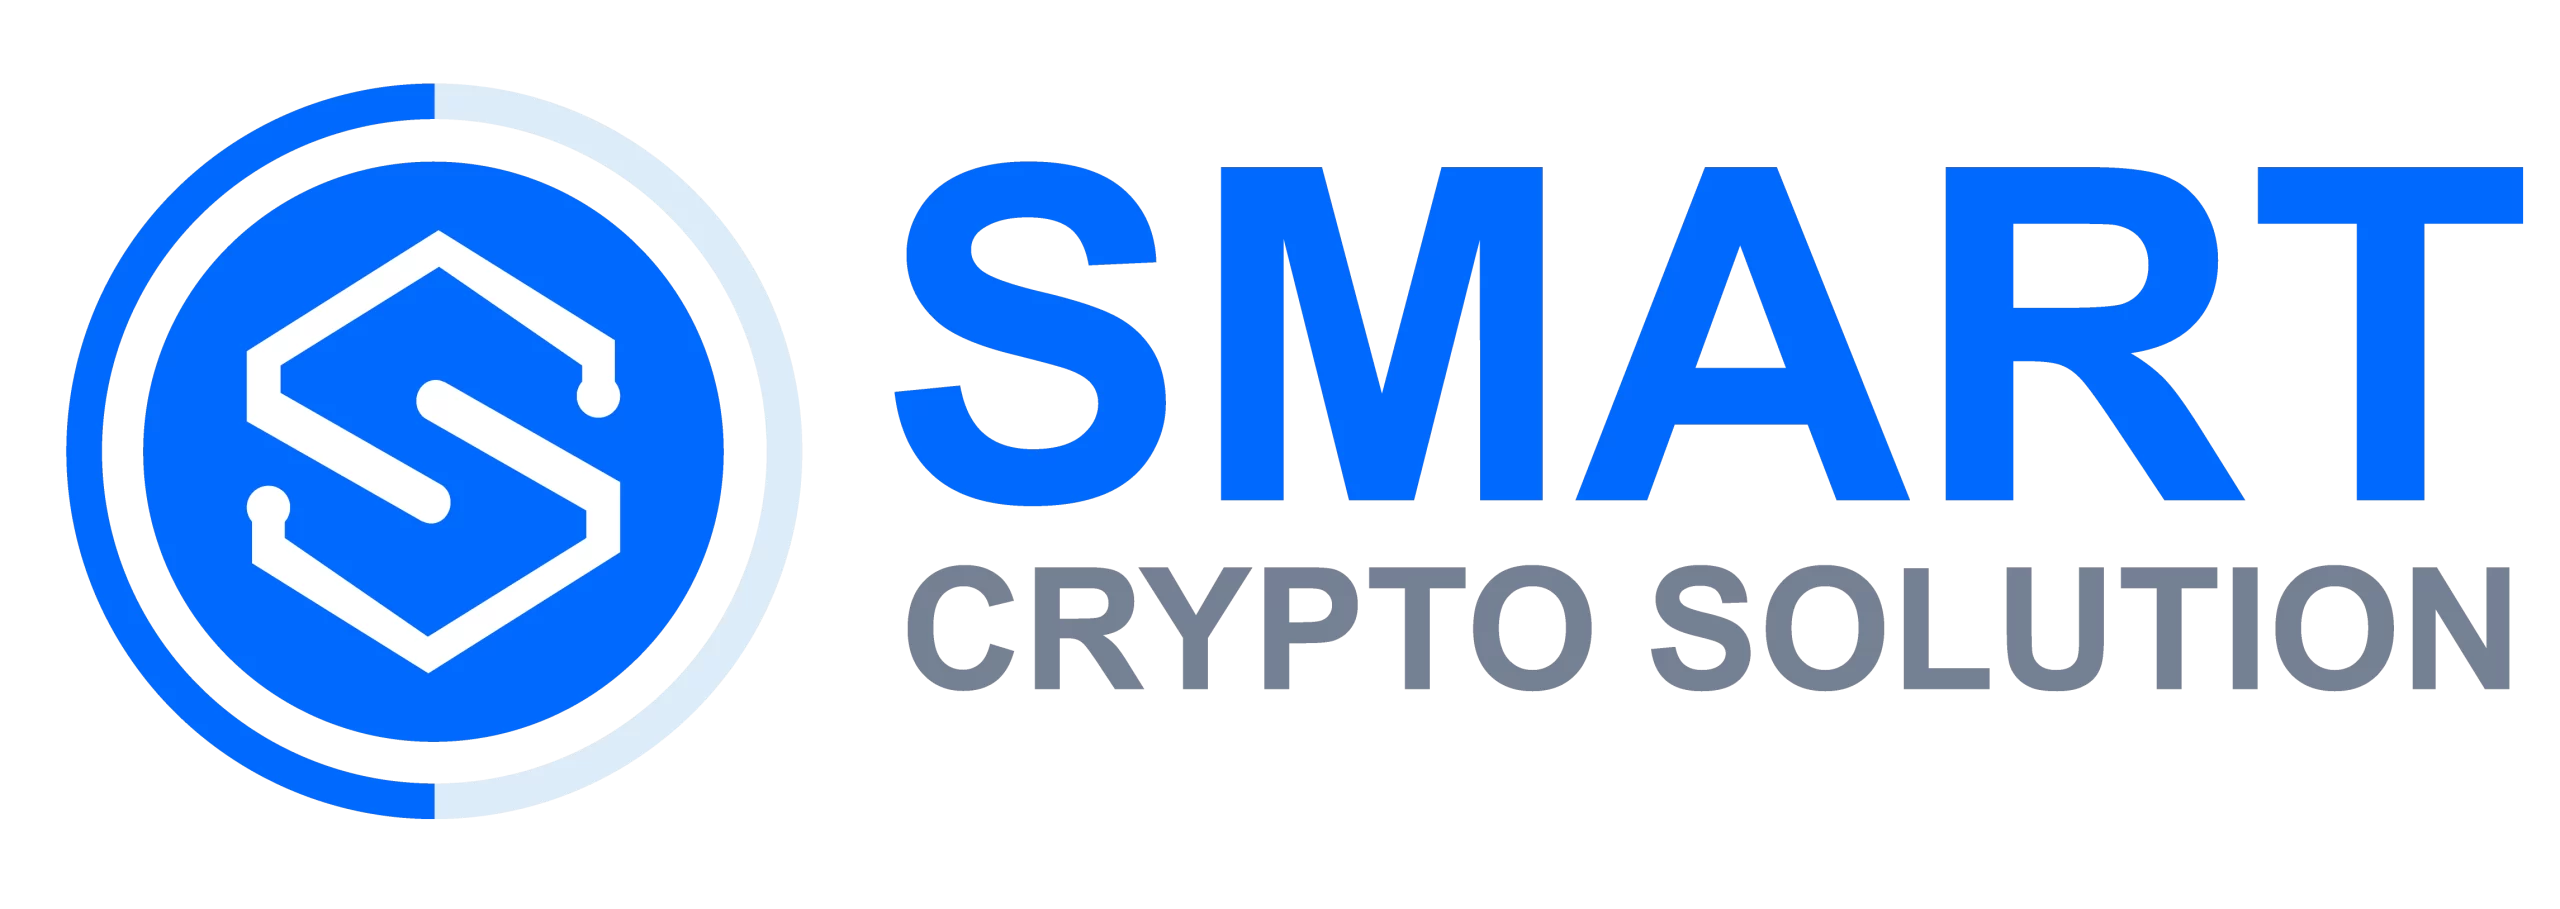 Smart Crypto Solution